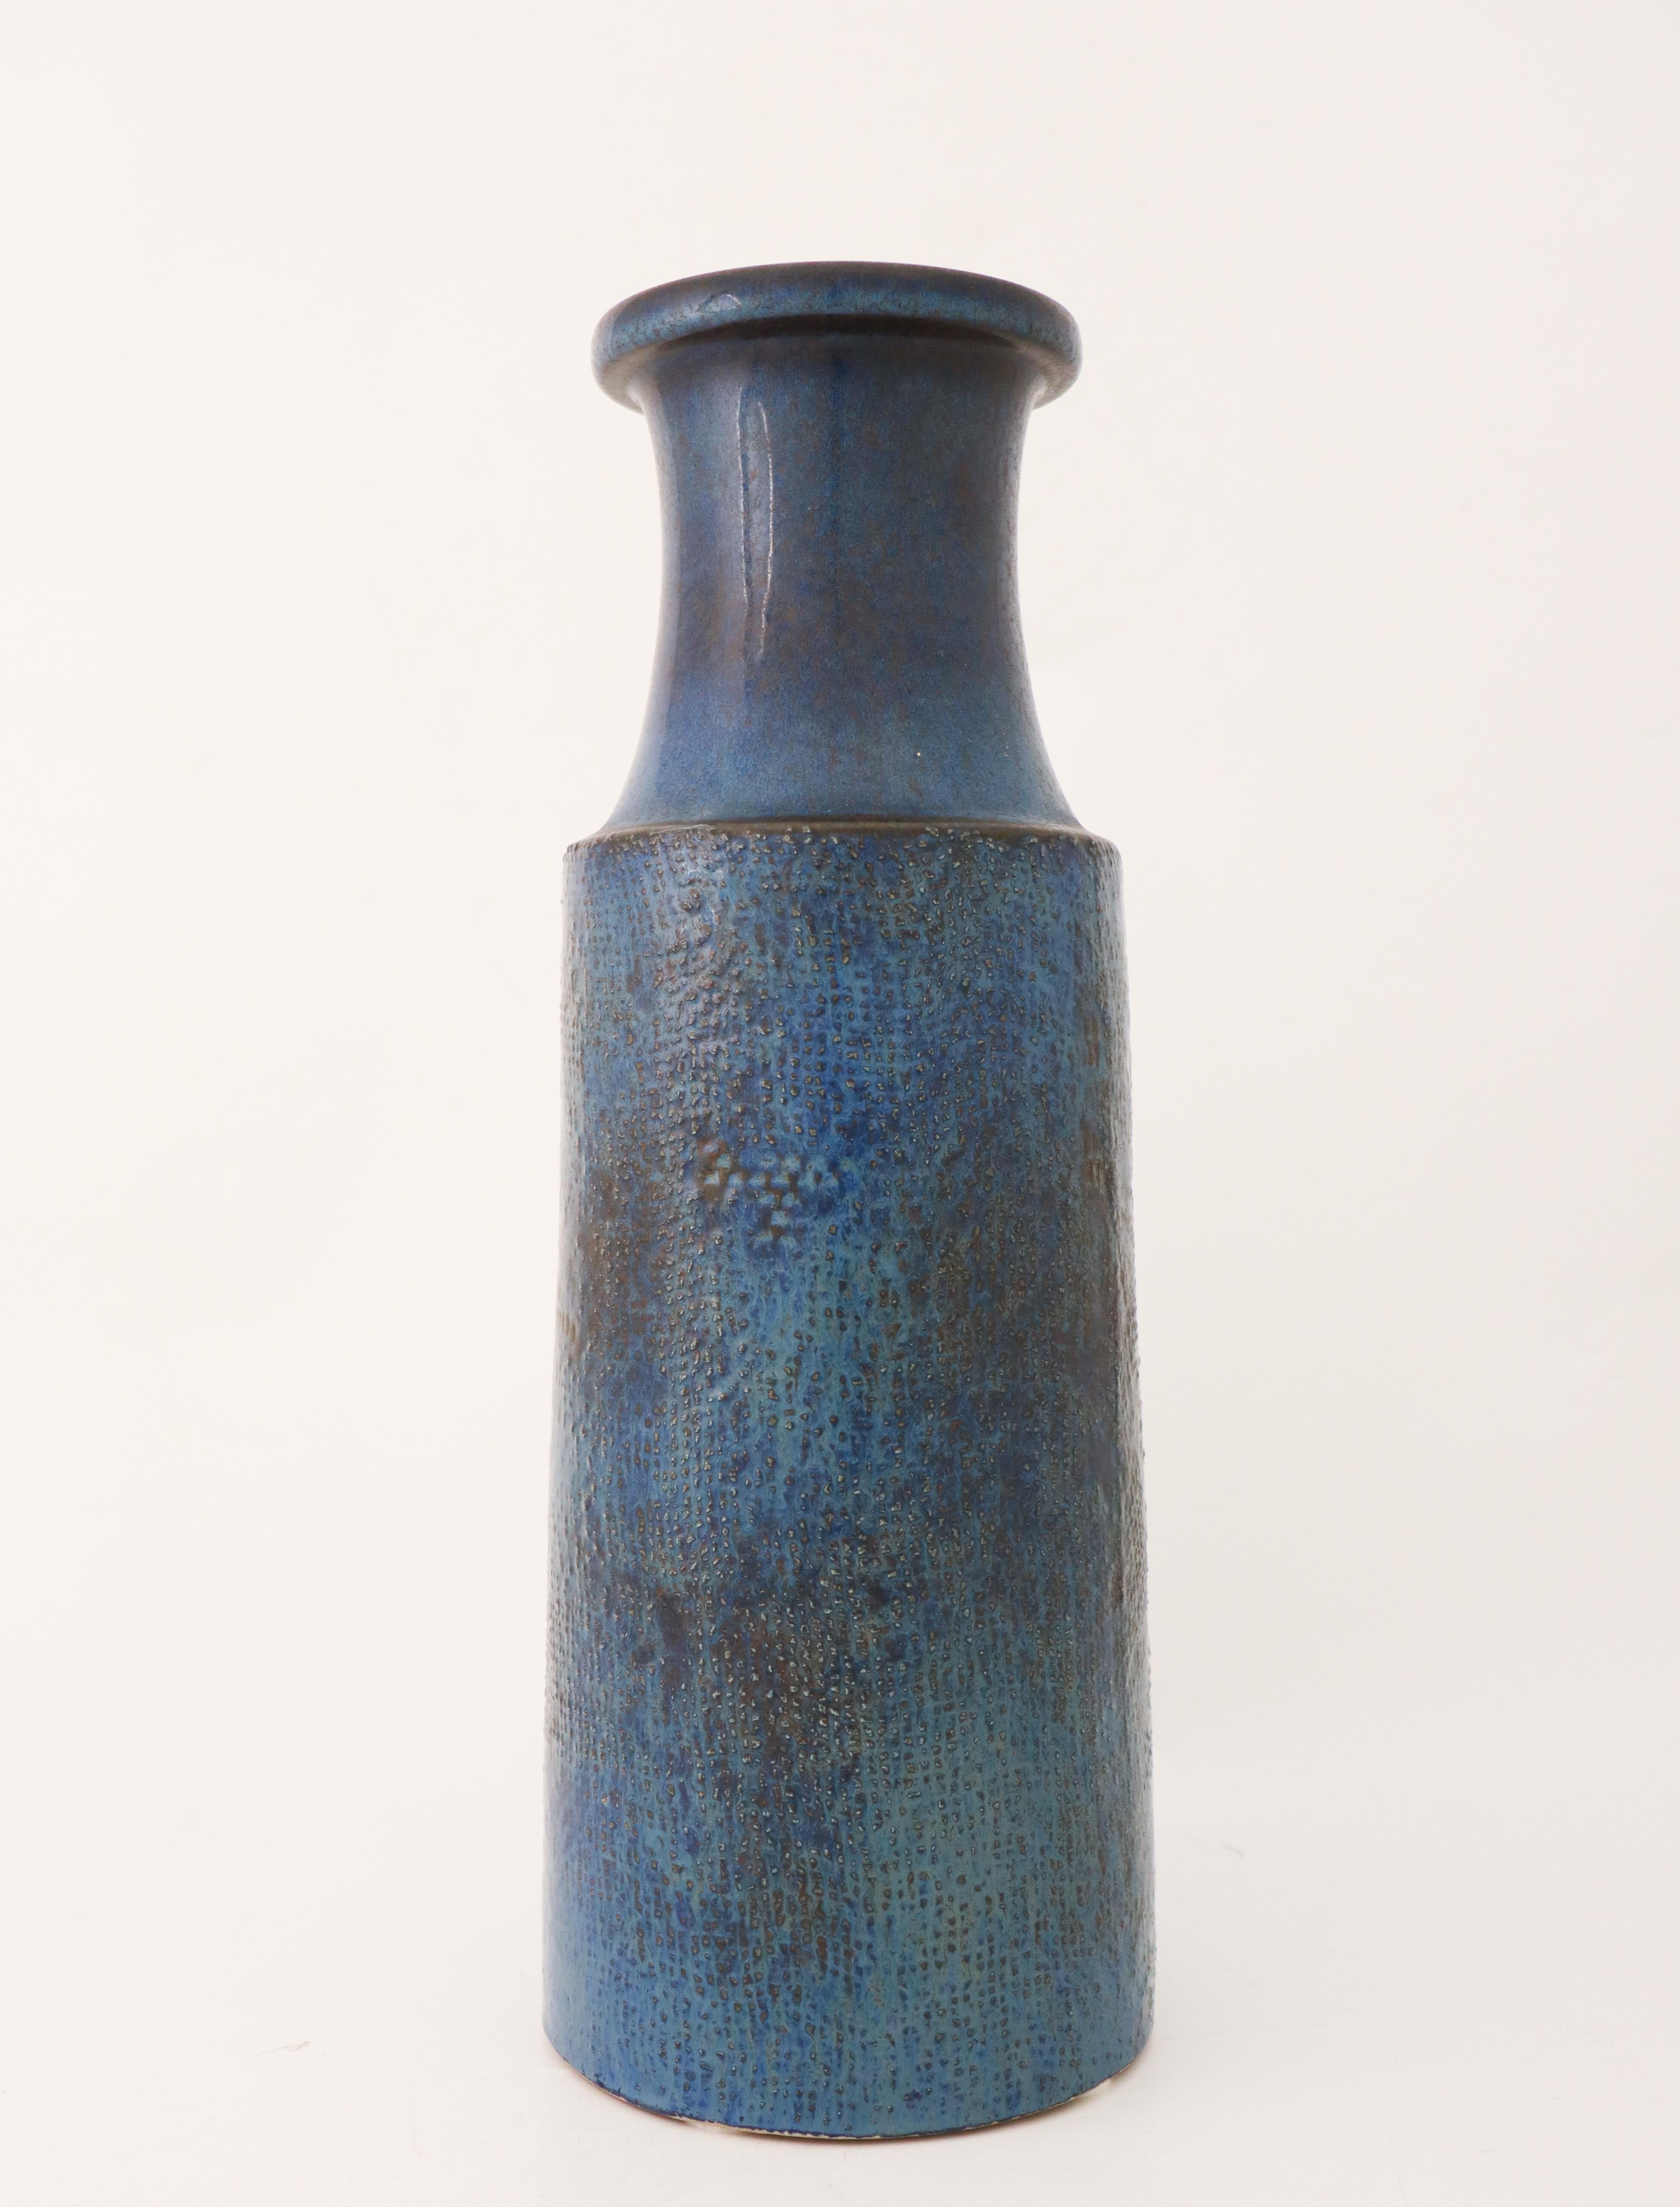 Großes blaues Vasenbesteck aus Steingut, Stig Lindberg, Gustavsbergs Studio, Vintage 1964 (19. Jahrhundert)